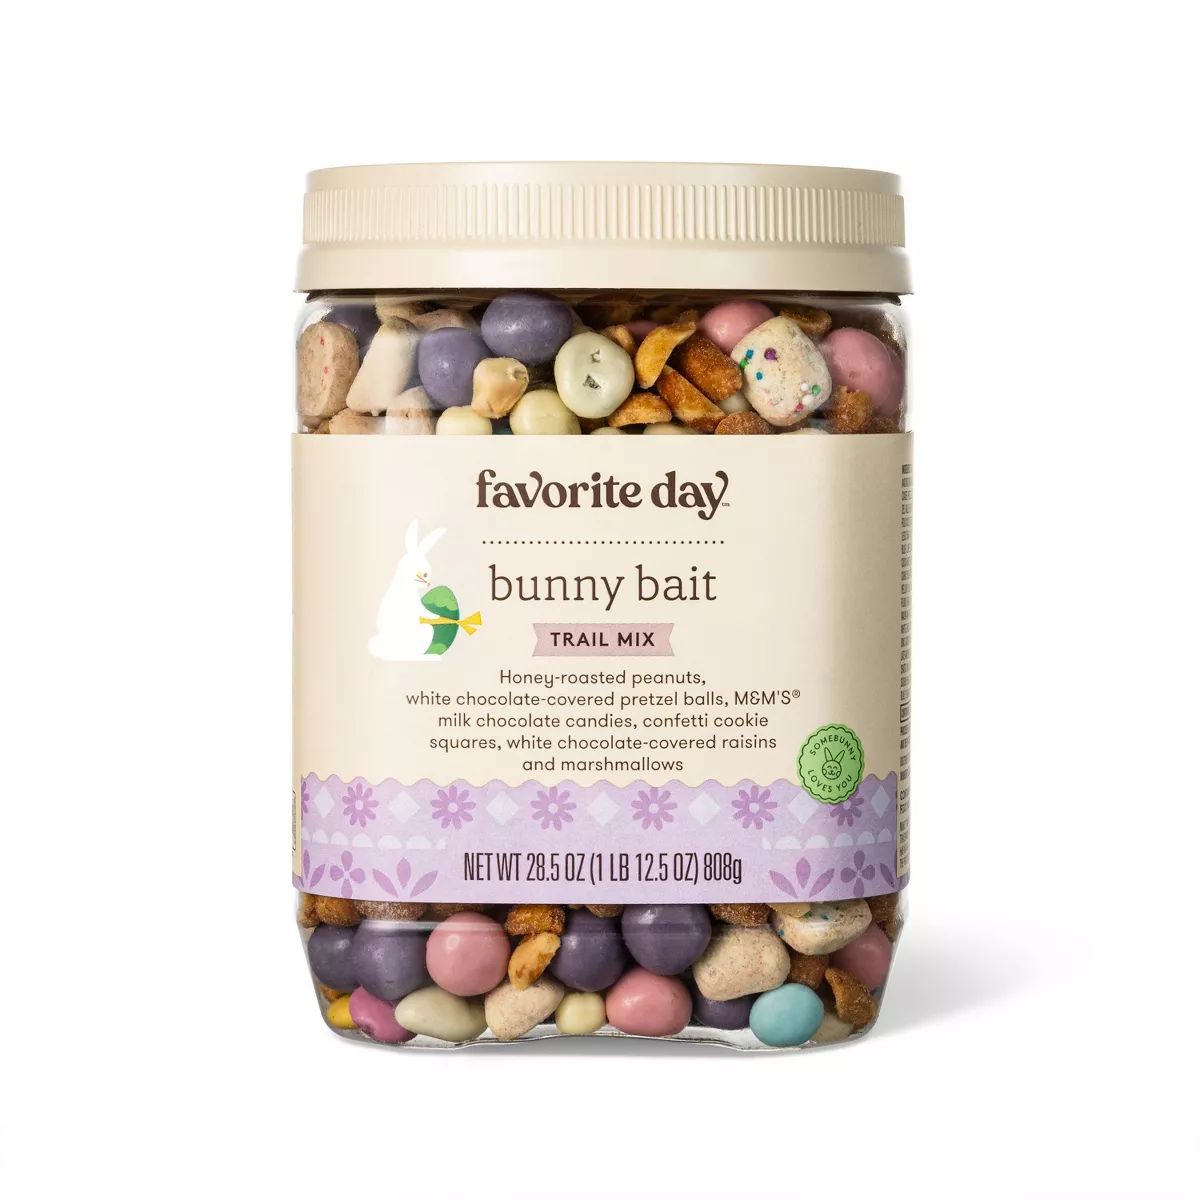 Spring Bunny Bait Trail Mix - 28.5oz - Favorite Day™ | Target